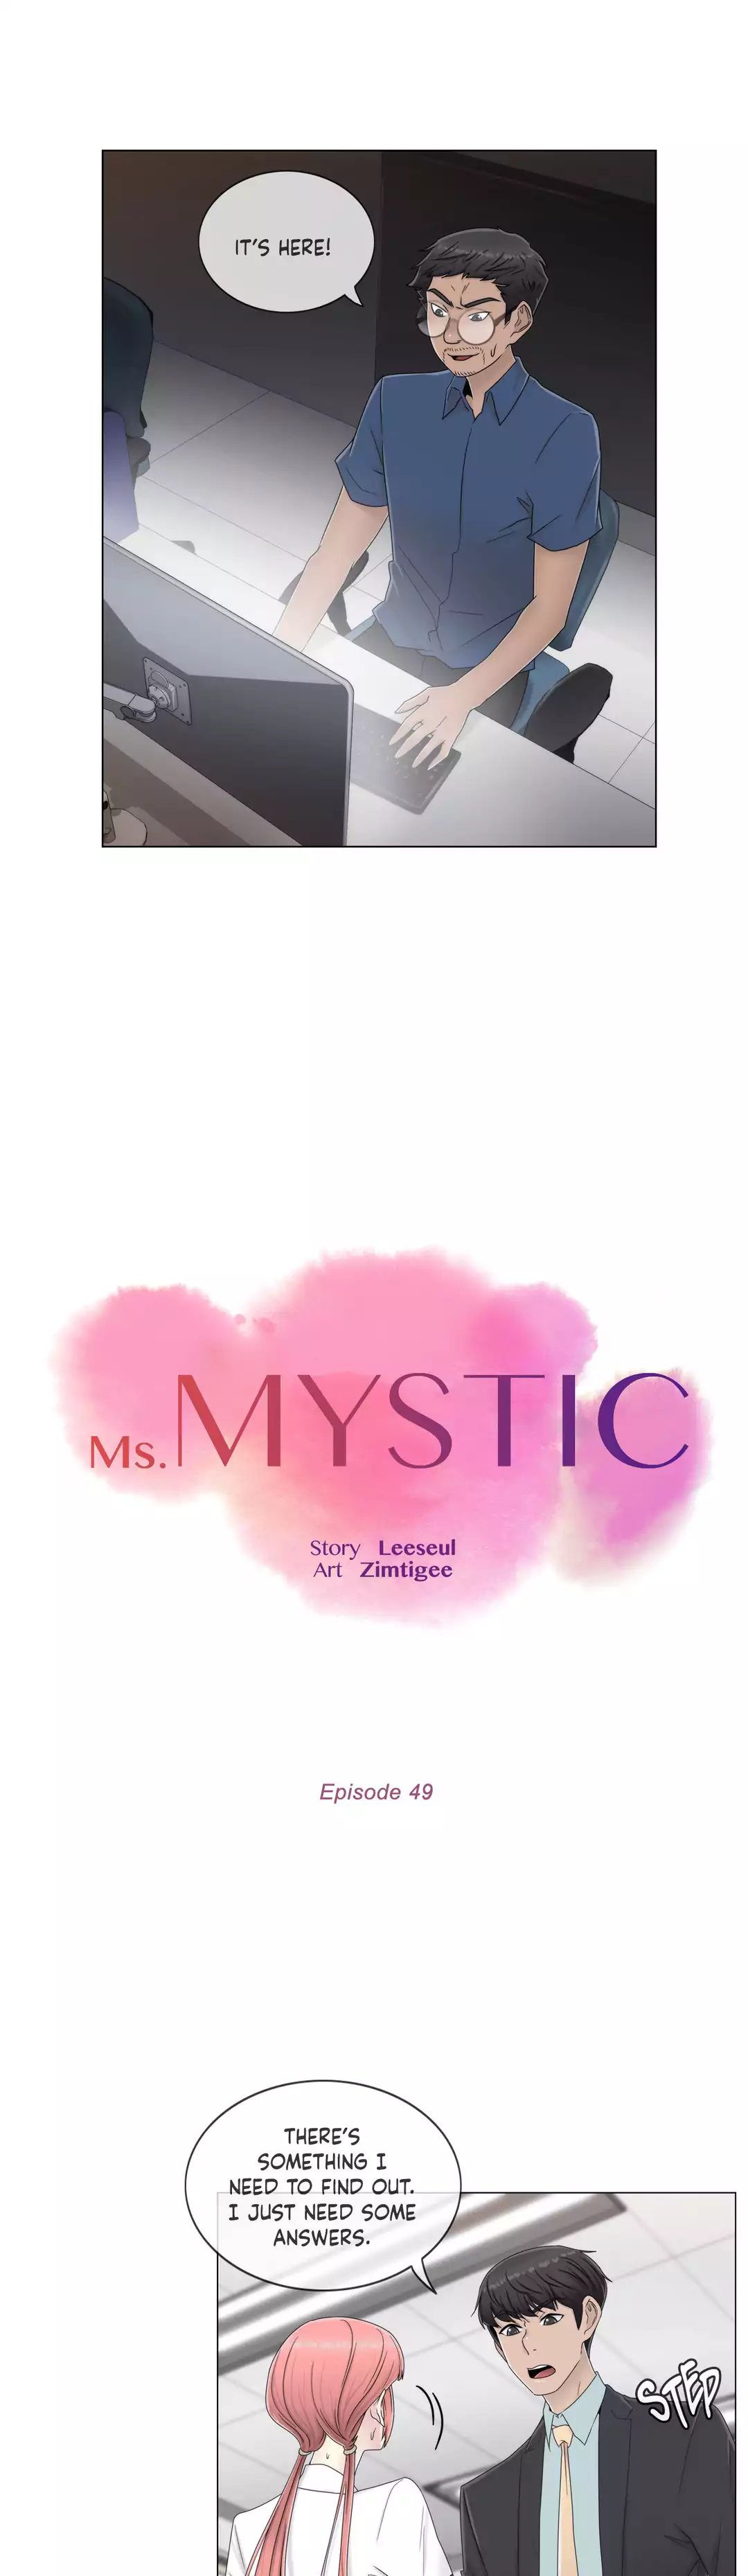 Miss Mystic image